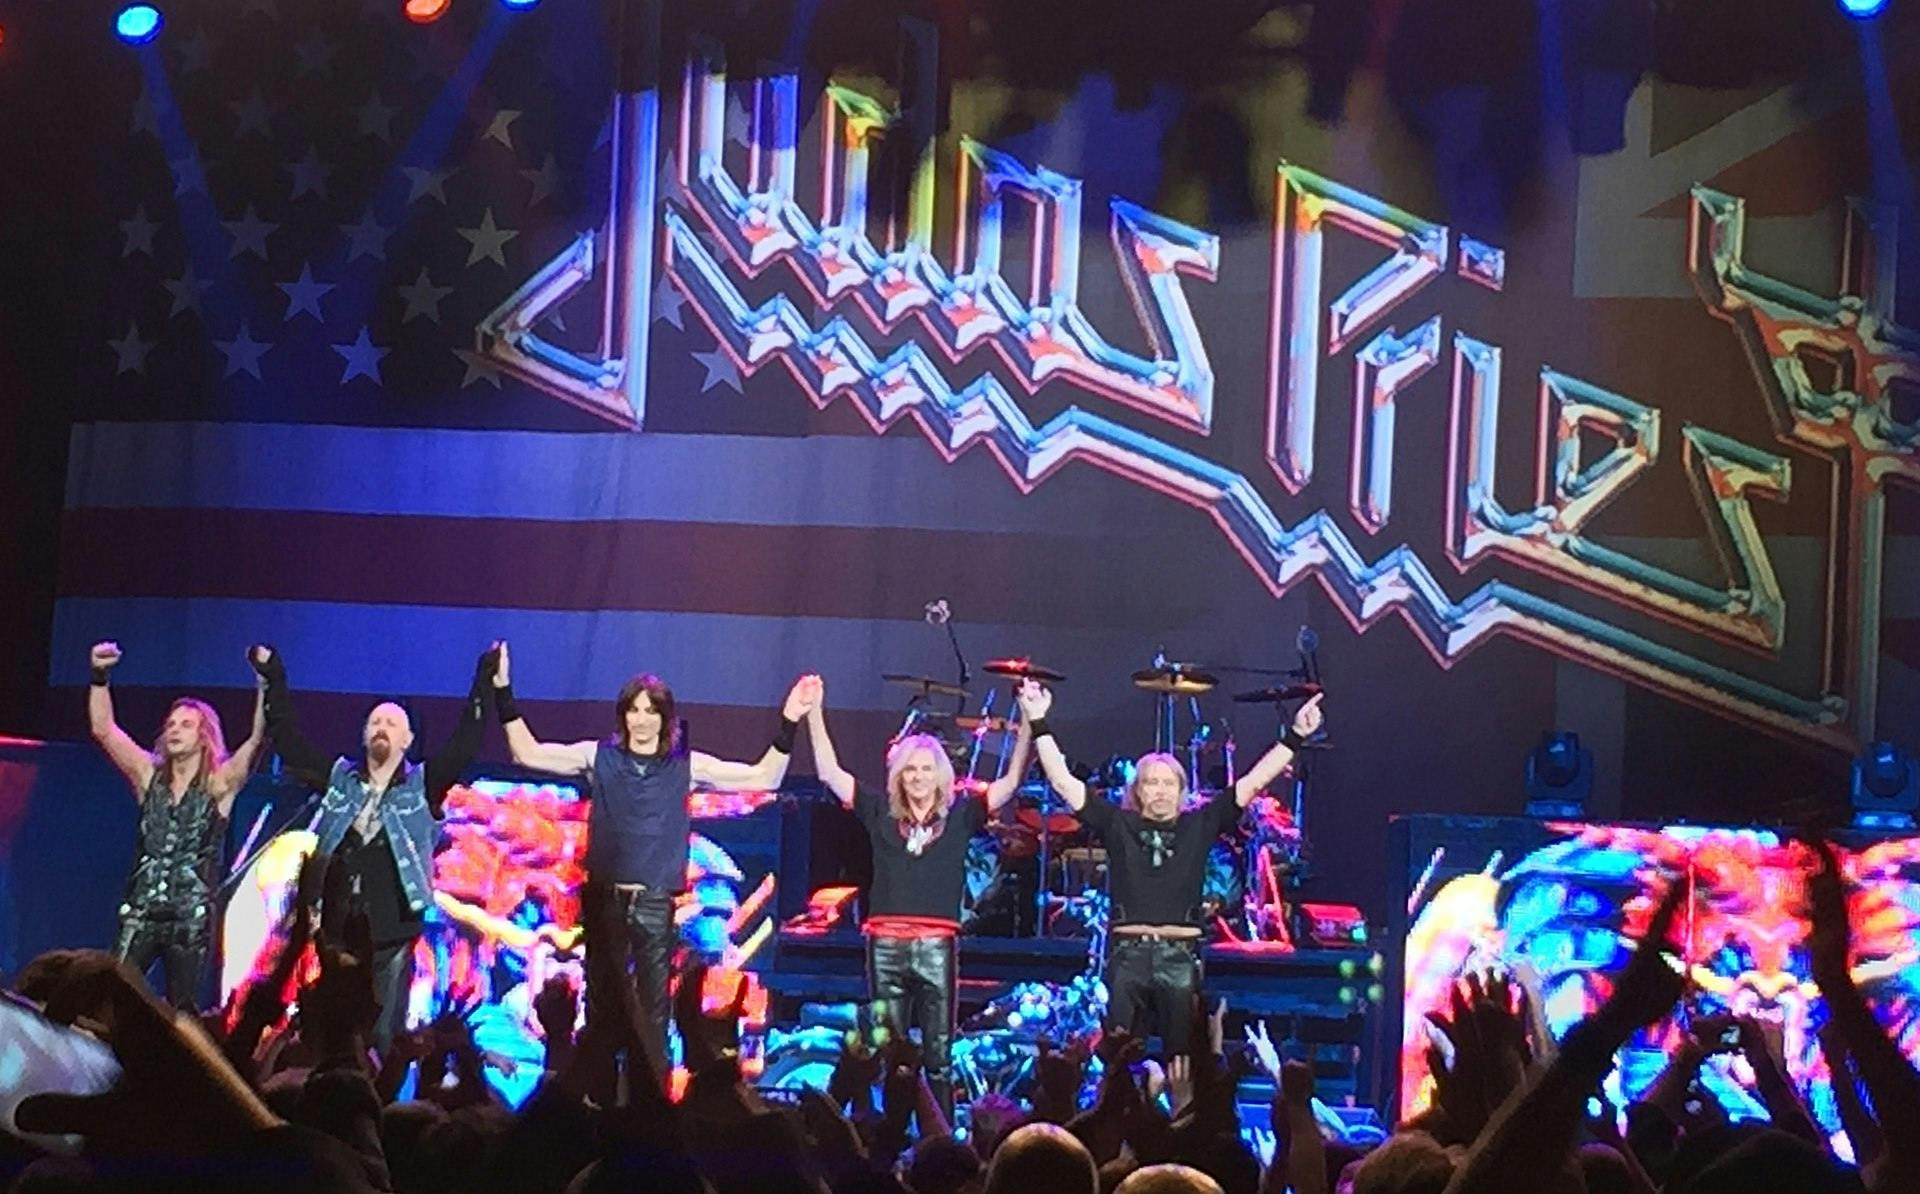 Judas Priest Announce New Album And US Tour